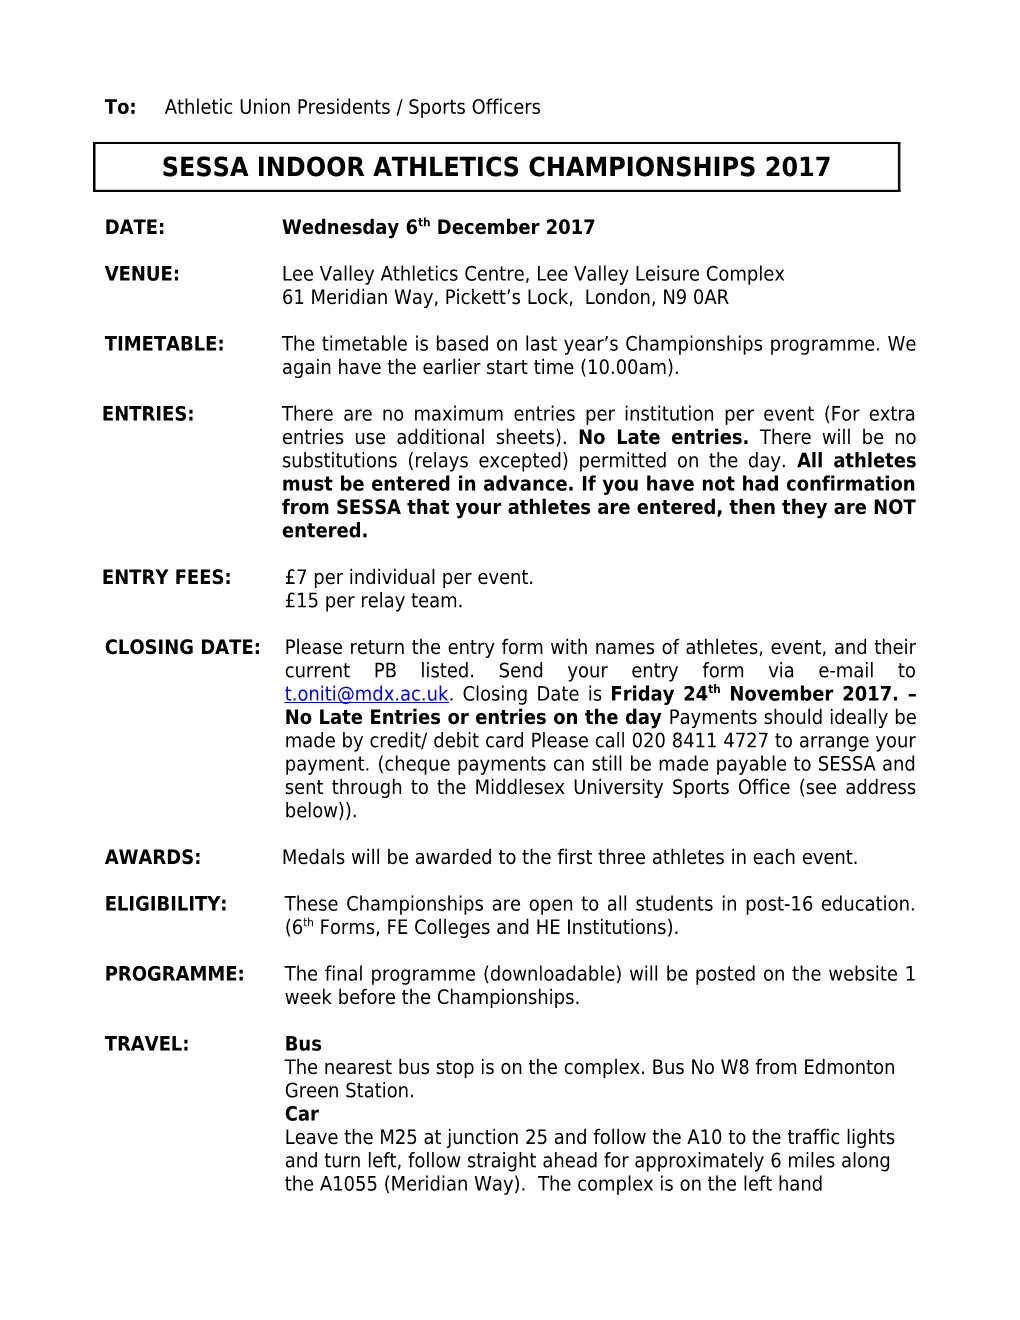 Sessa Indoor Athletics Championships 2017